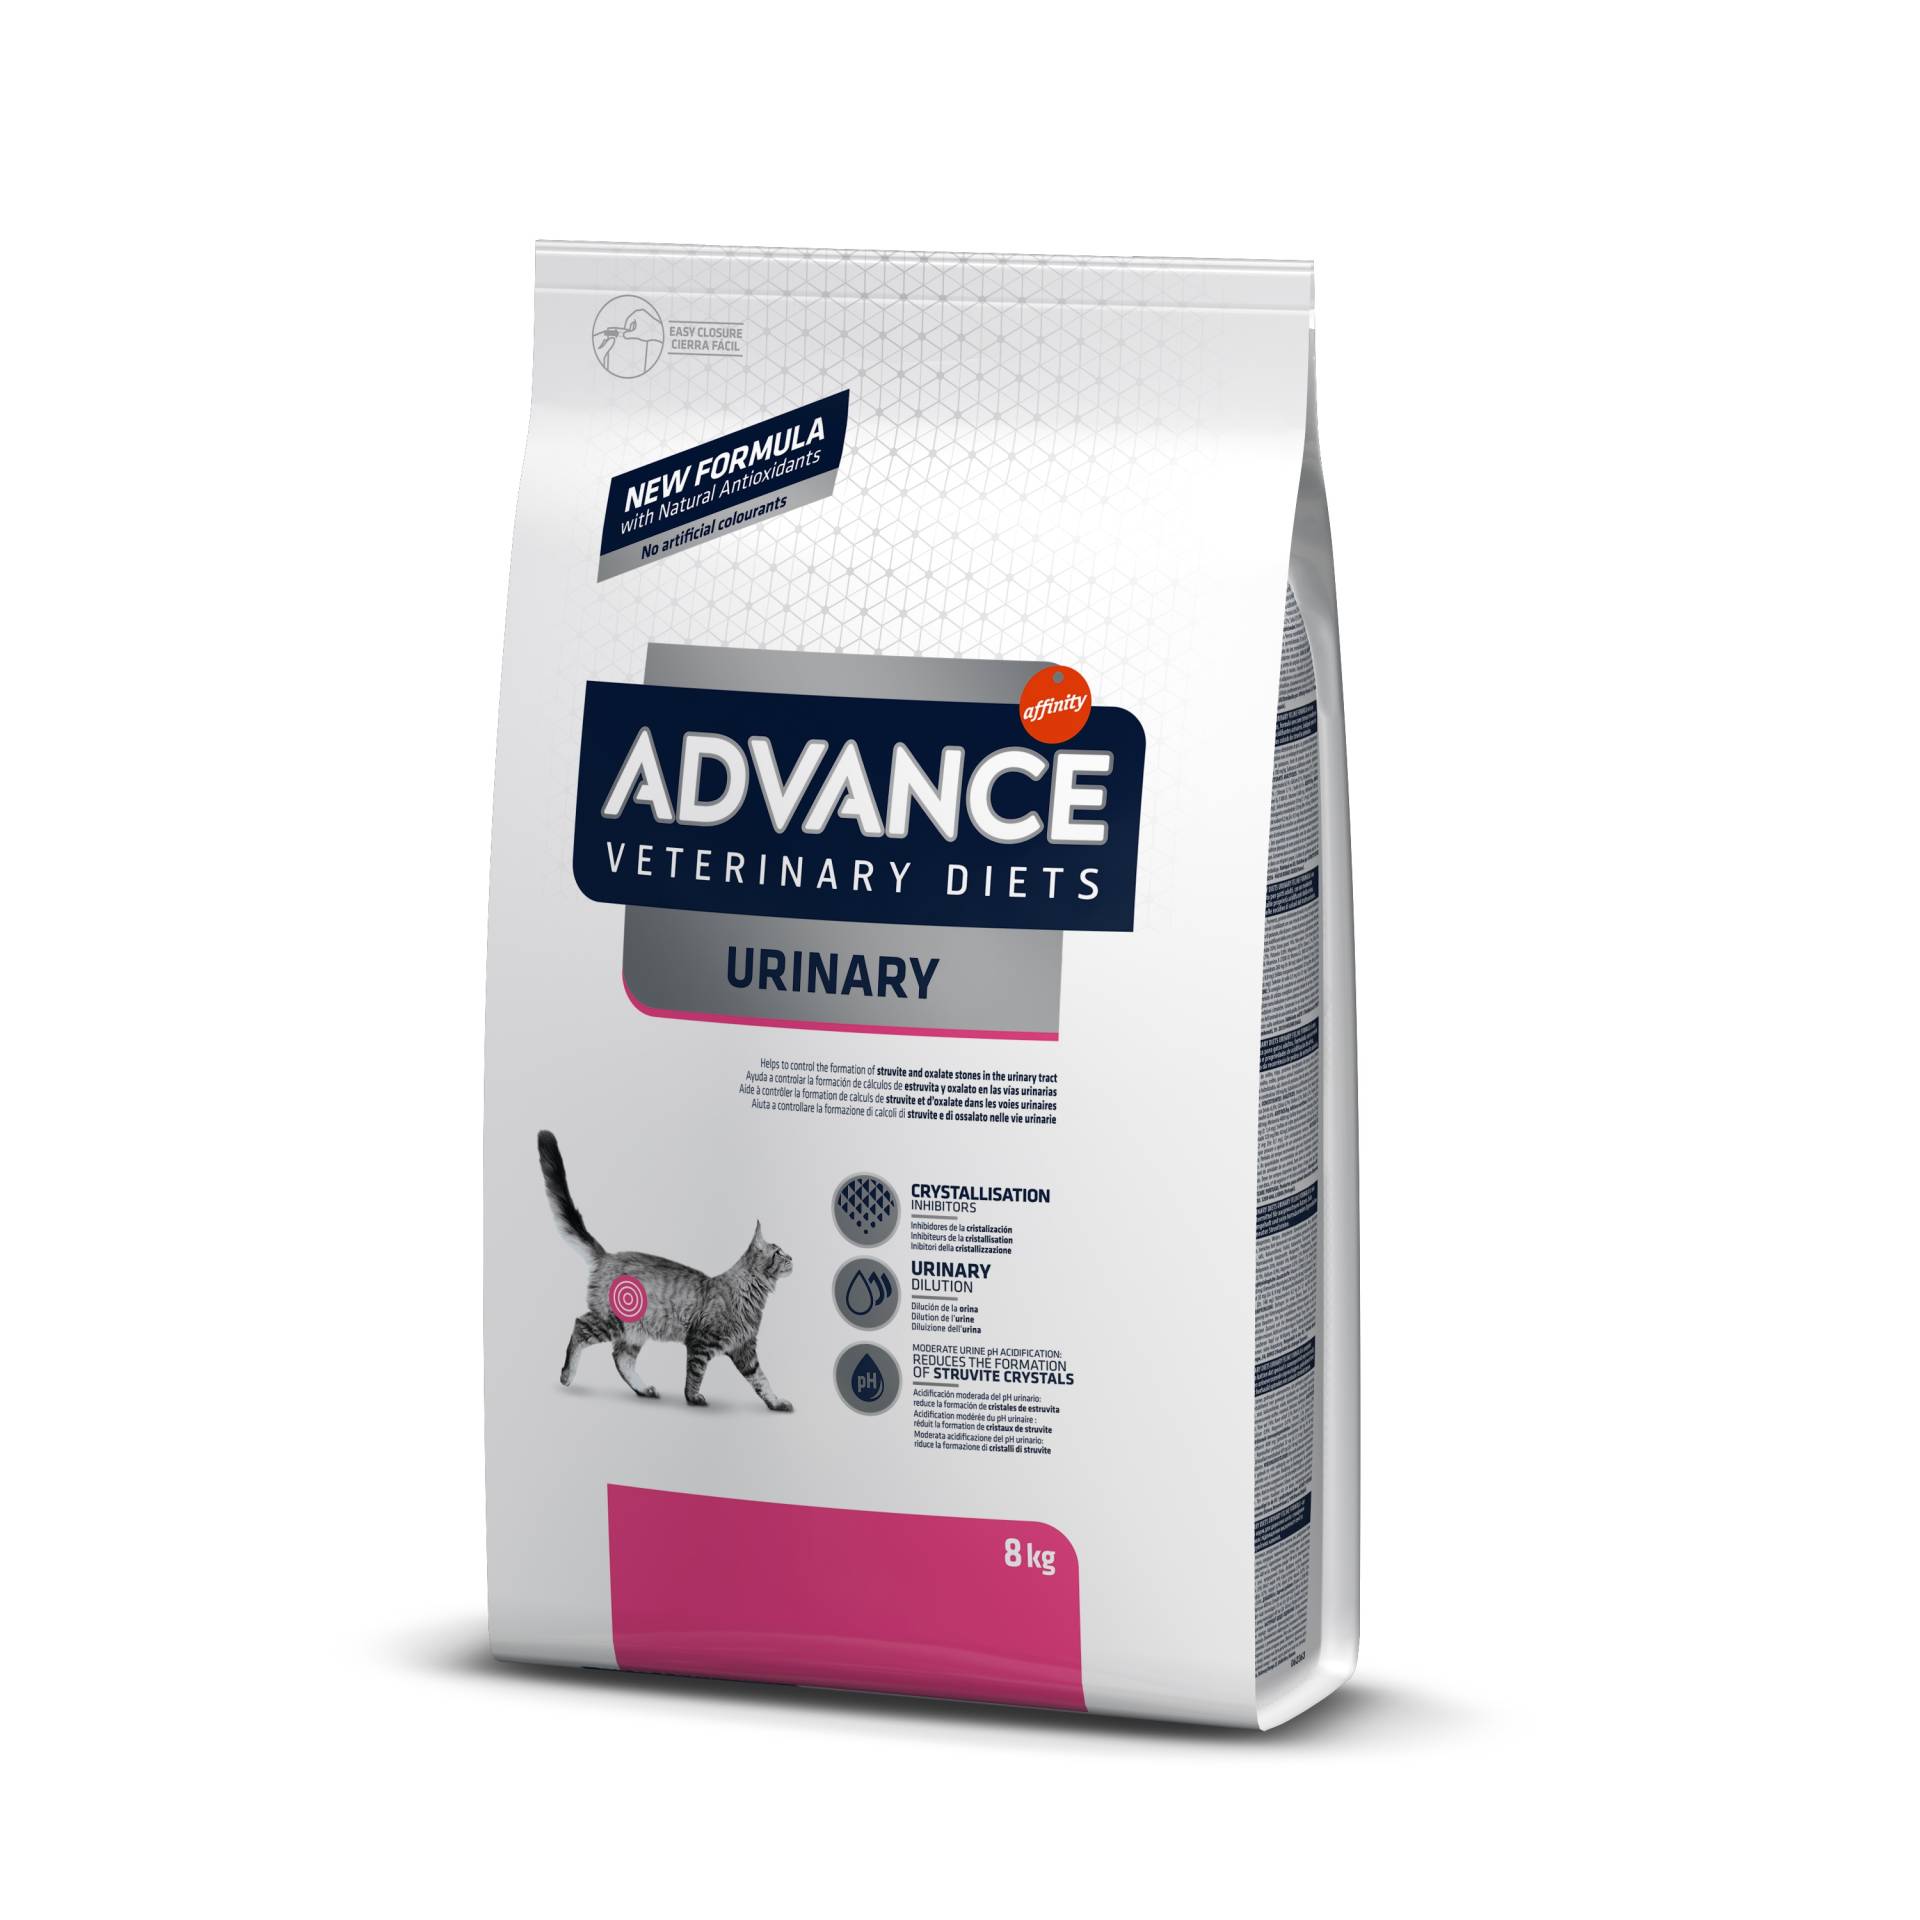 Advance Veterinary Diets Urinary Feline - Sparpaket: 2 x 8 kg von Affinity Advance Veterinary Diets